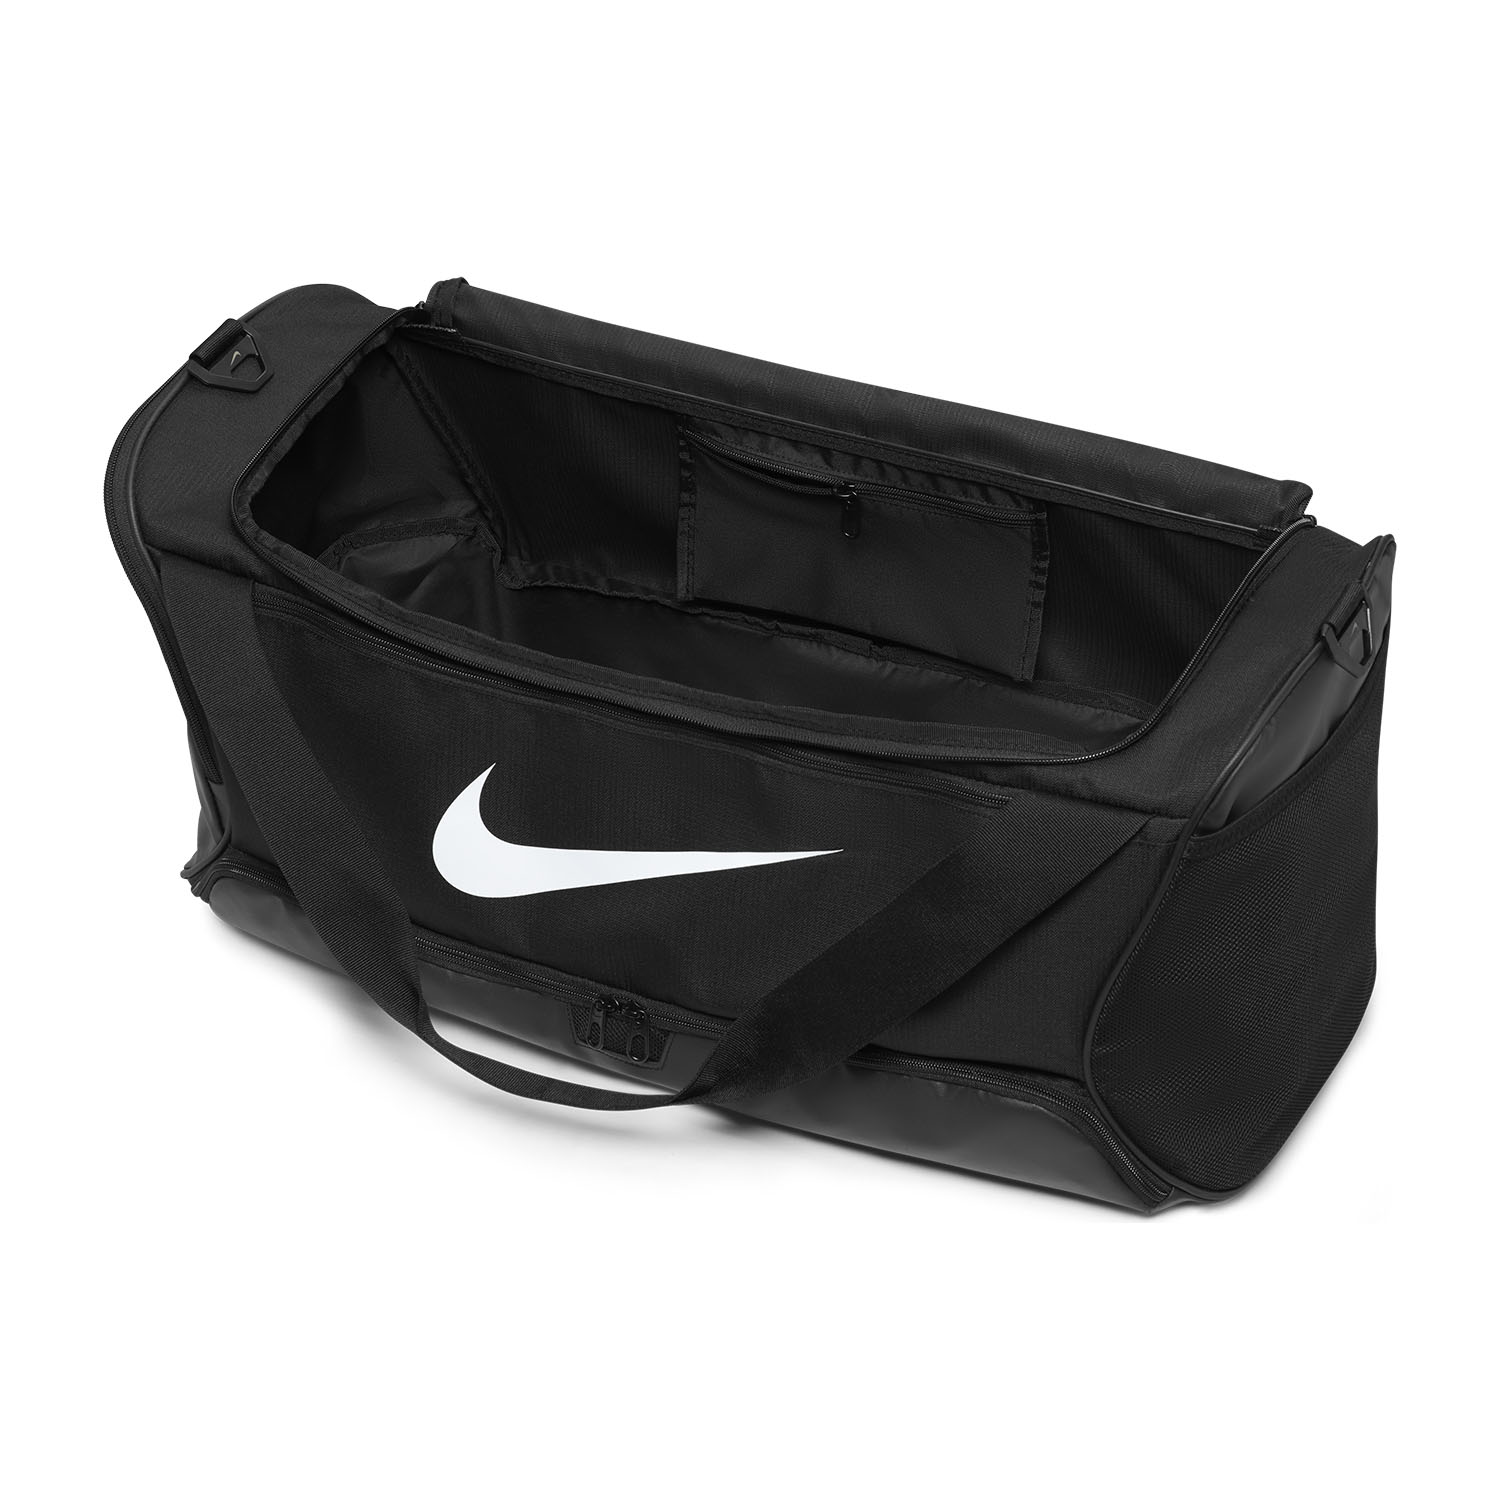 Nike Brasilia 9.5 Medium Duffle - Black/White